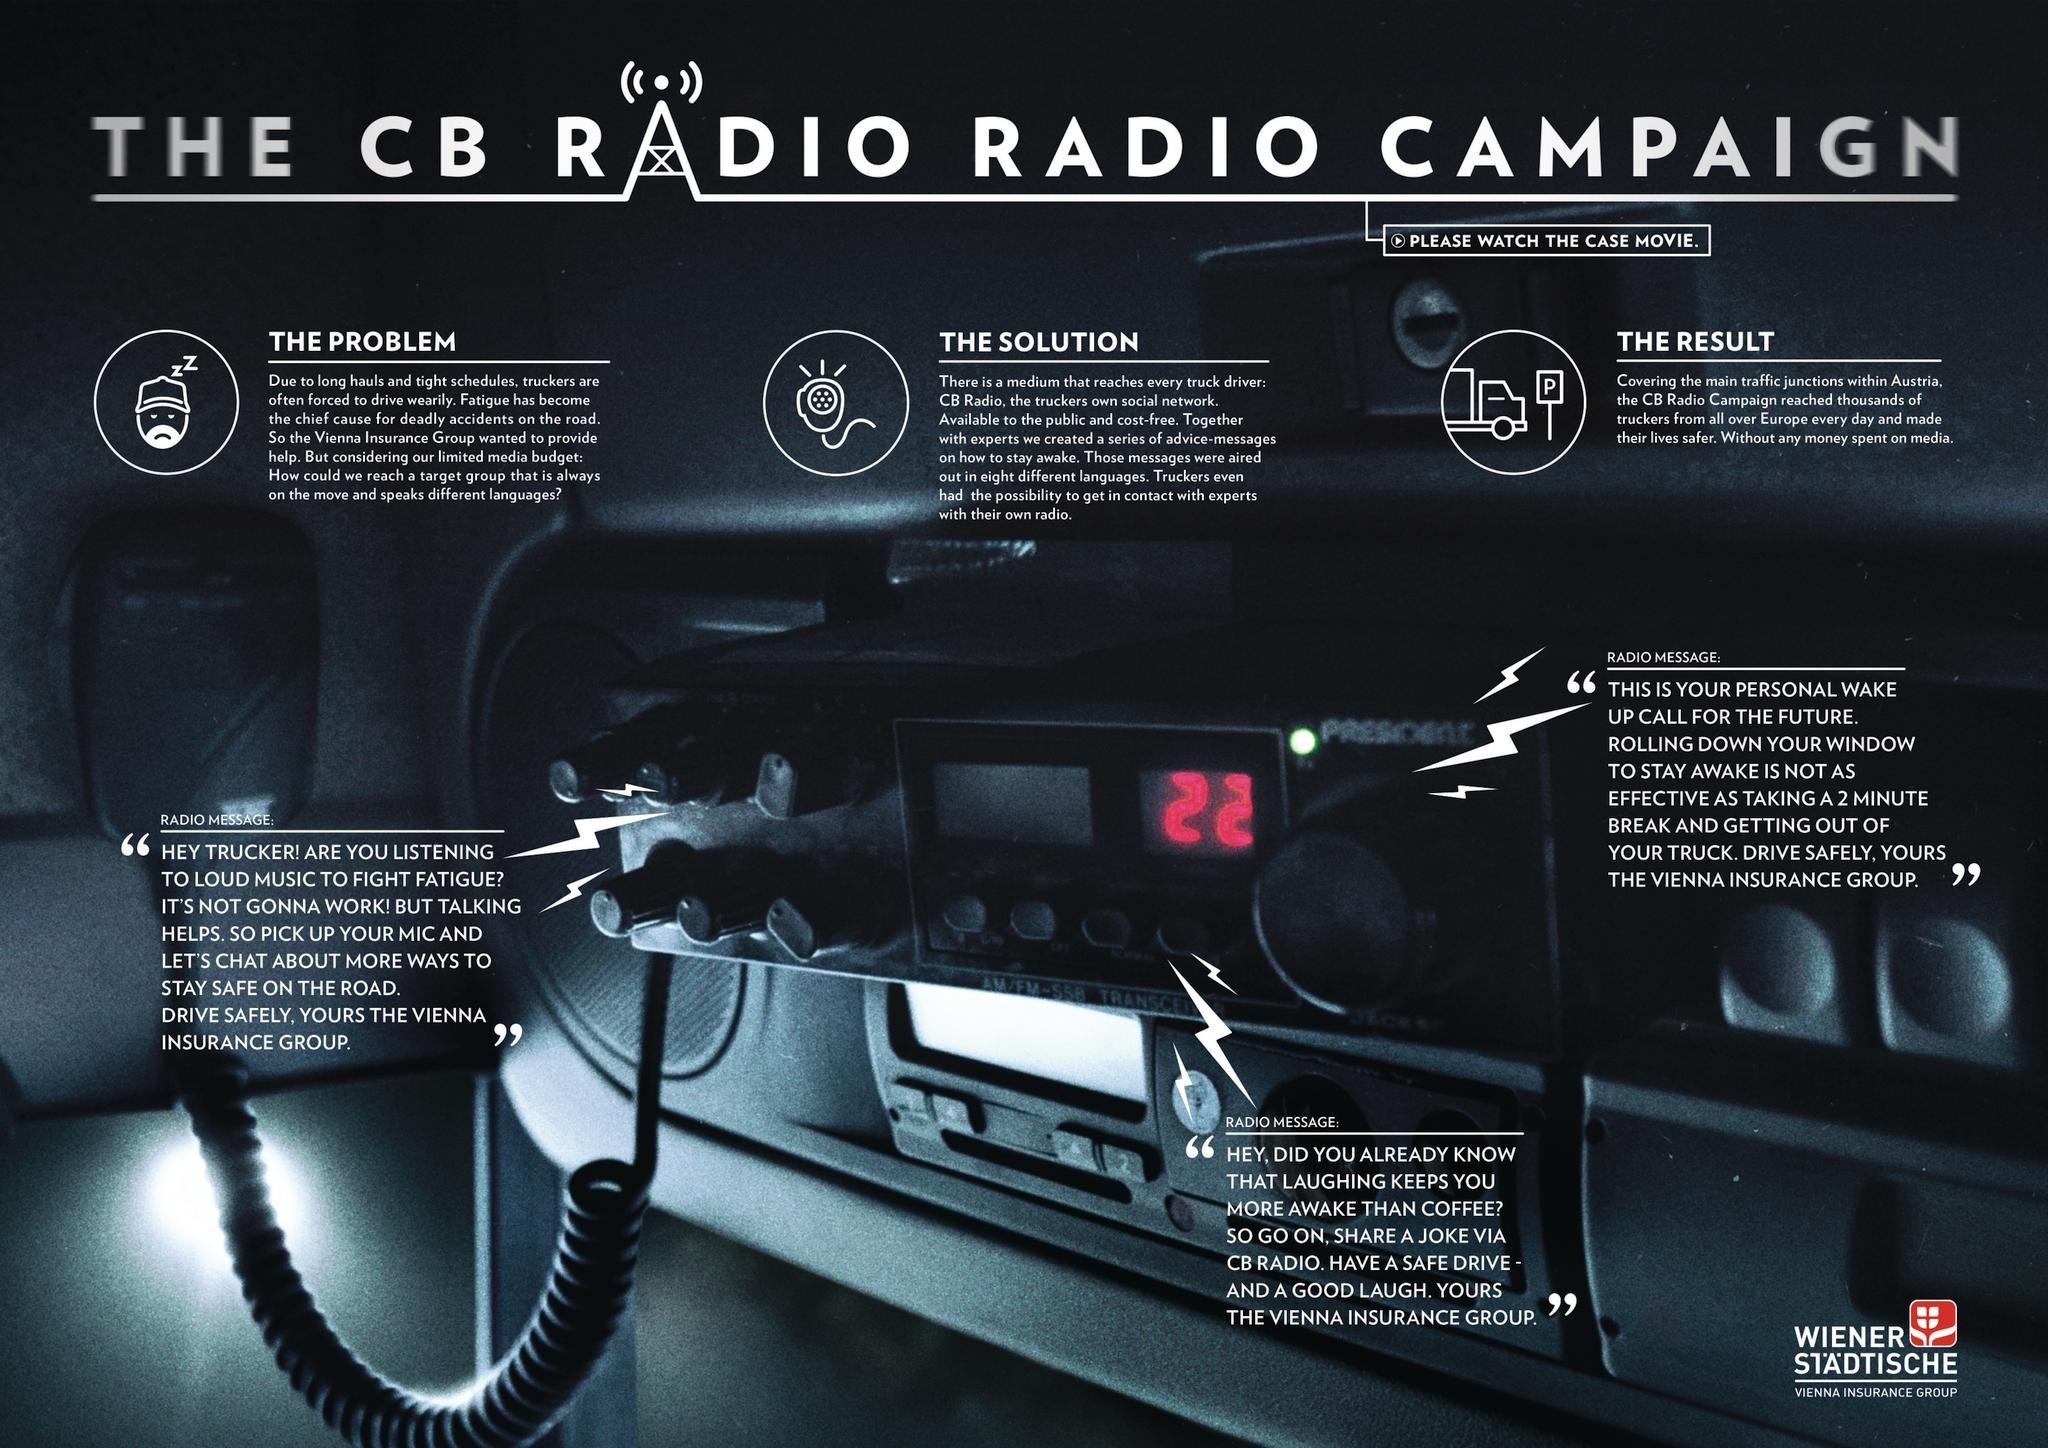 THE CB RADIO RADIO CAMPAIGN